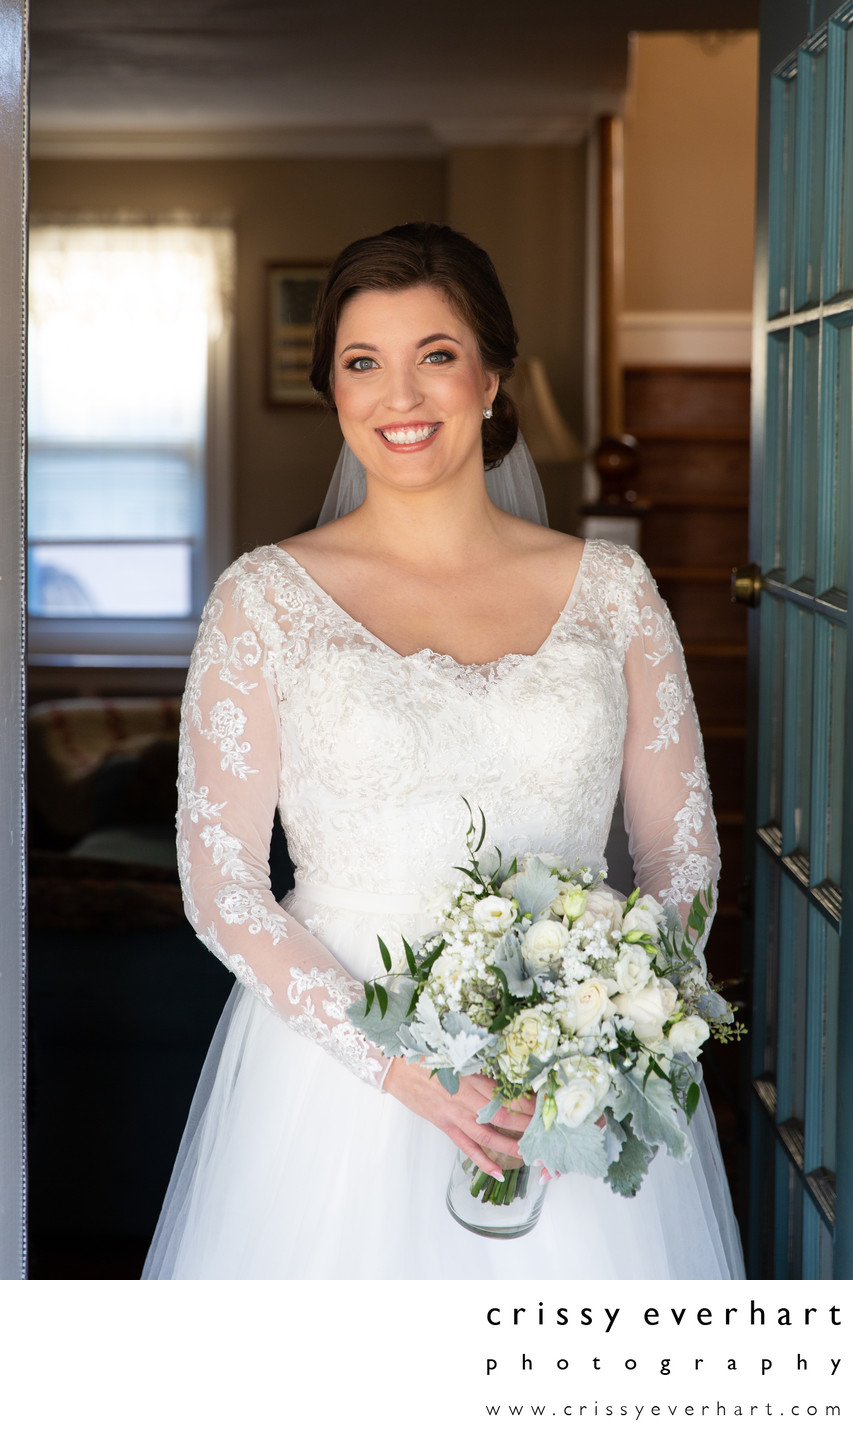 Bridal Portrait in Doorway - Wedding Prep Photos